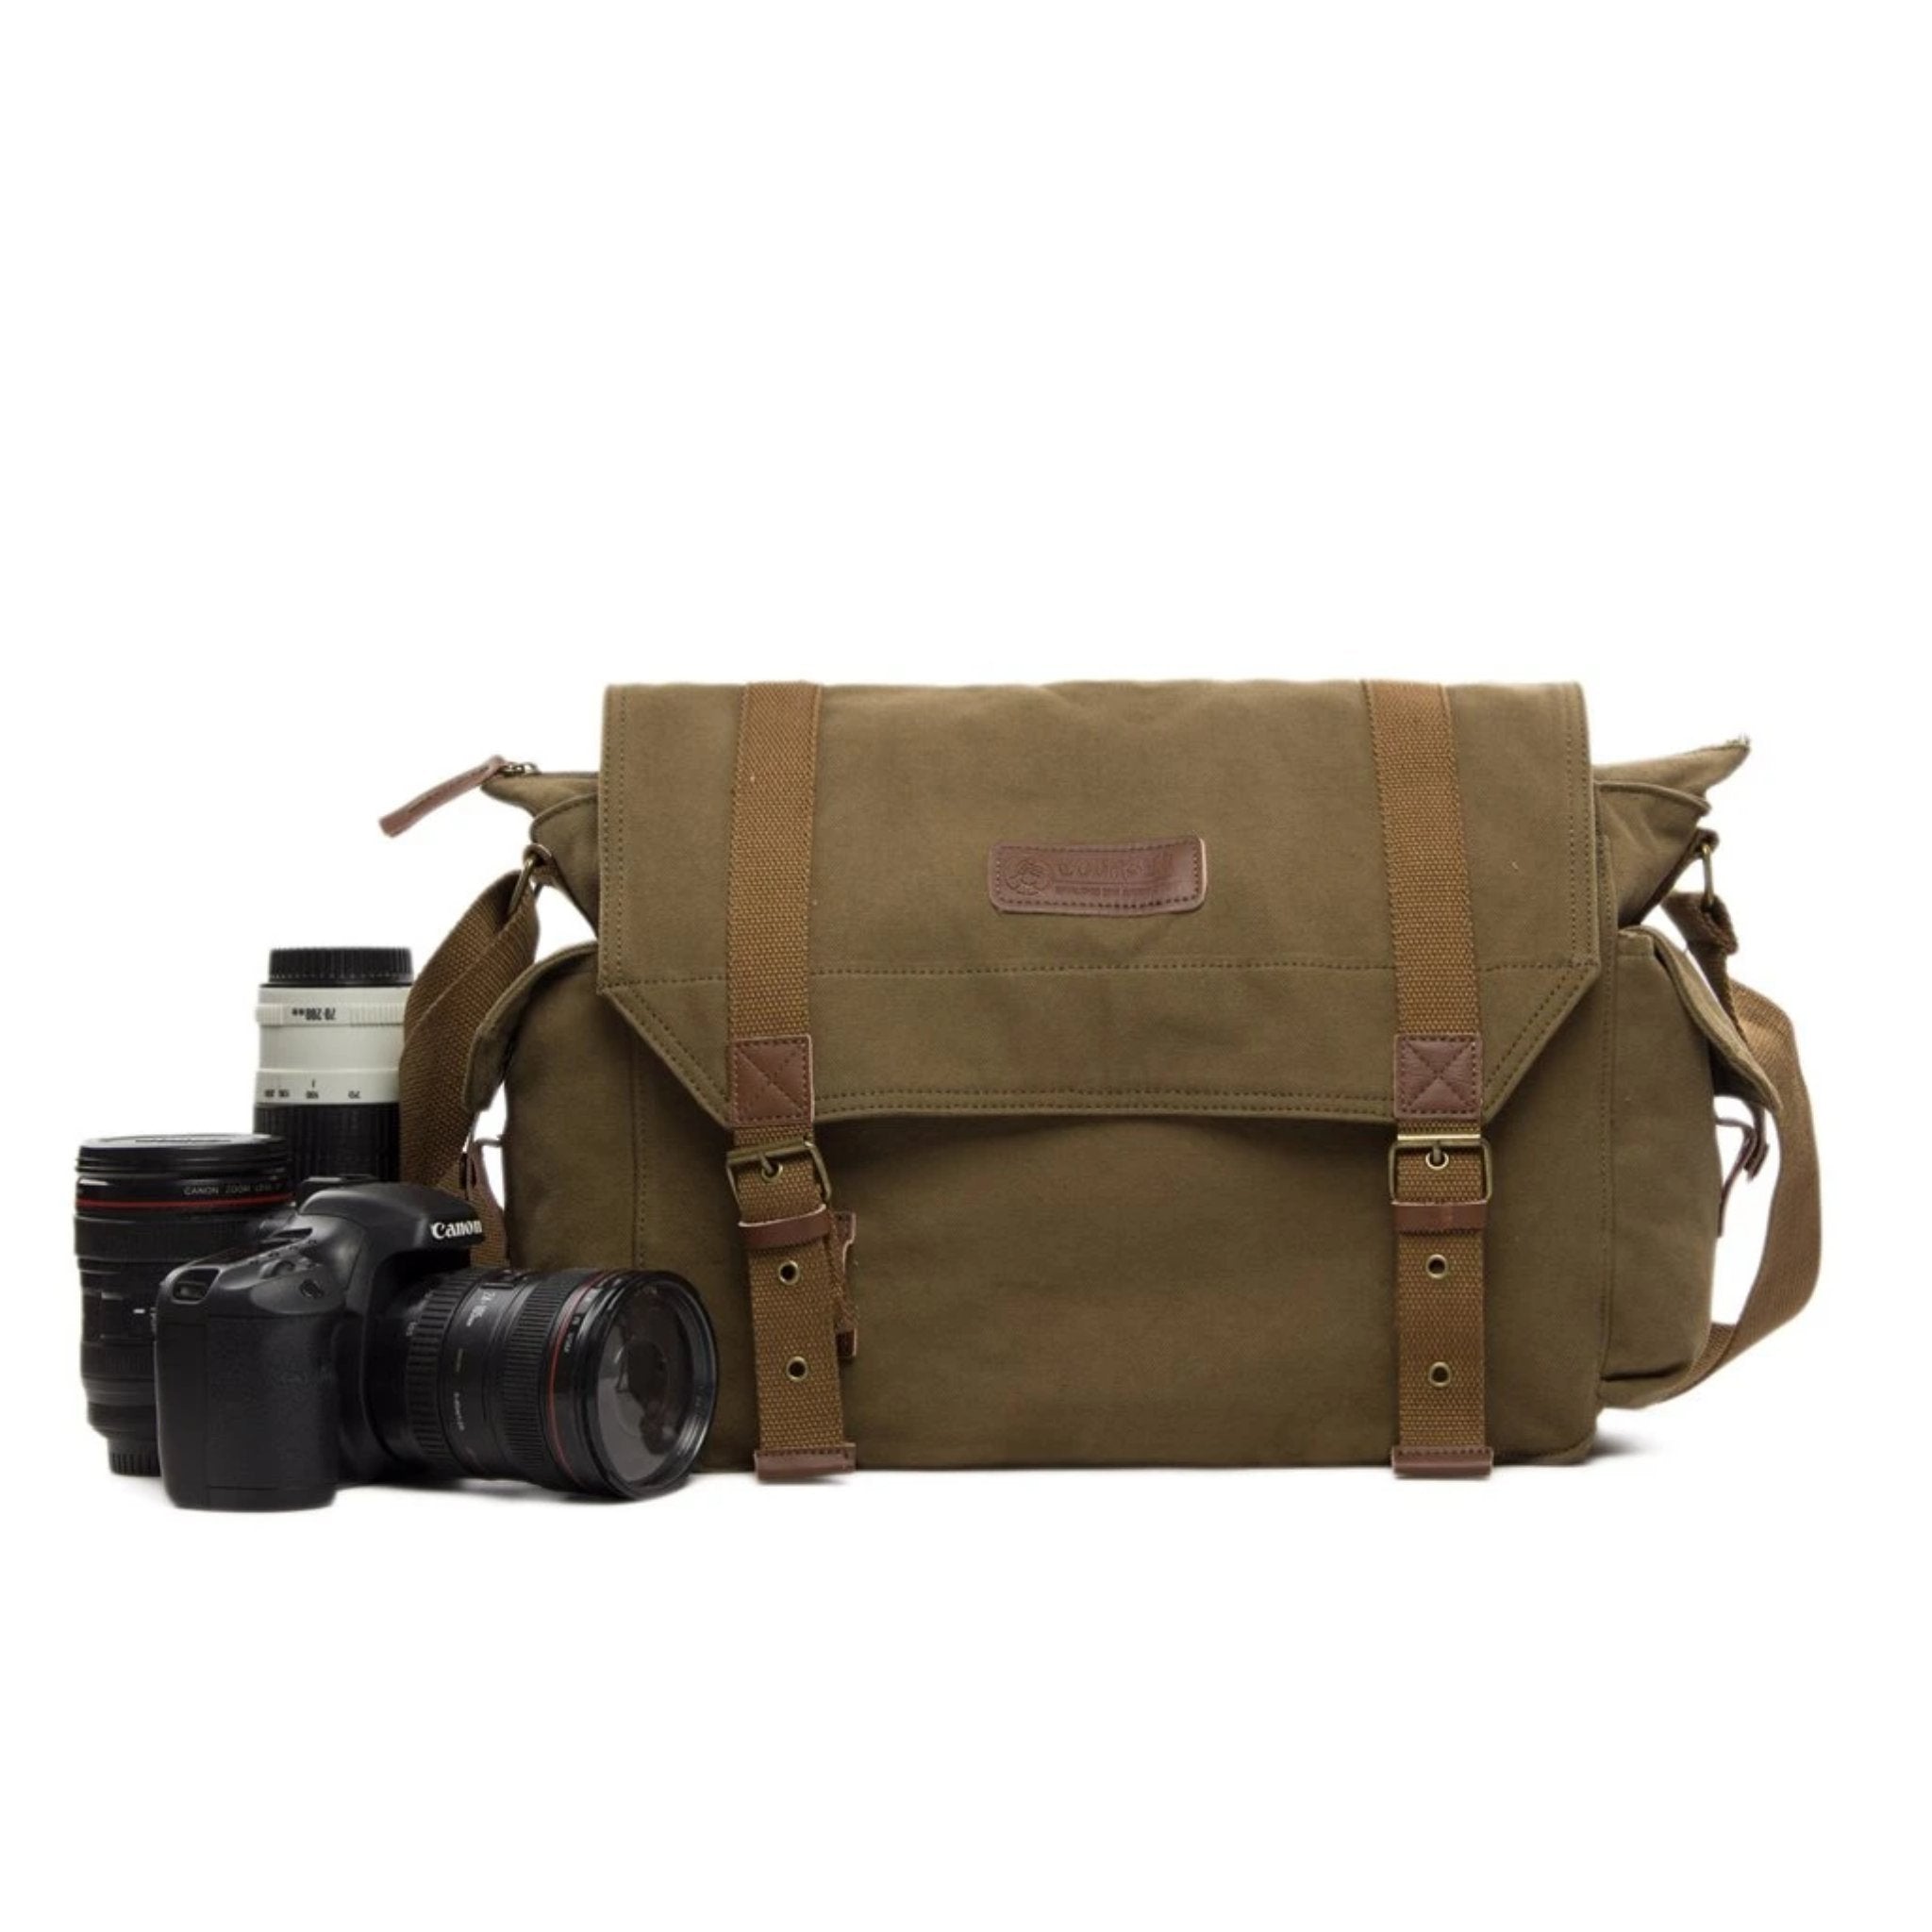 Waxed Canvas Simple DSLR Camera Messenger Bag, Diaper Bag - Army Green - Blue Sebe Handmade Leather Bags